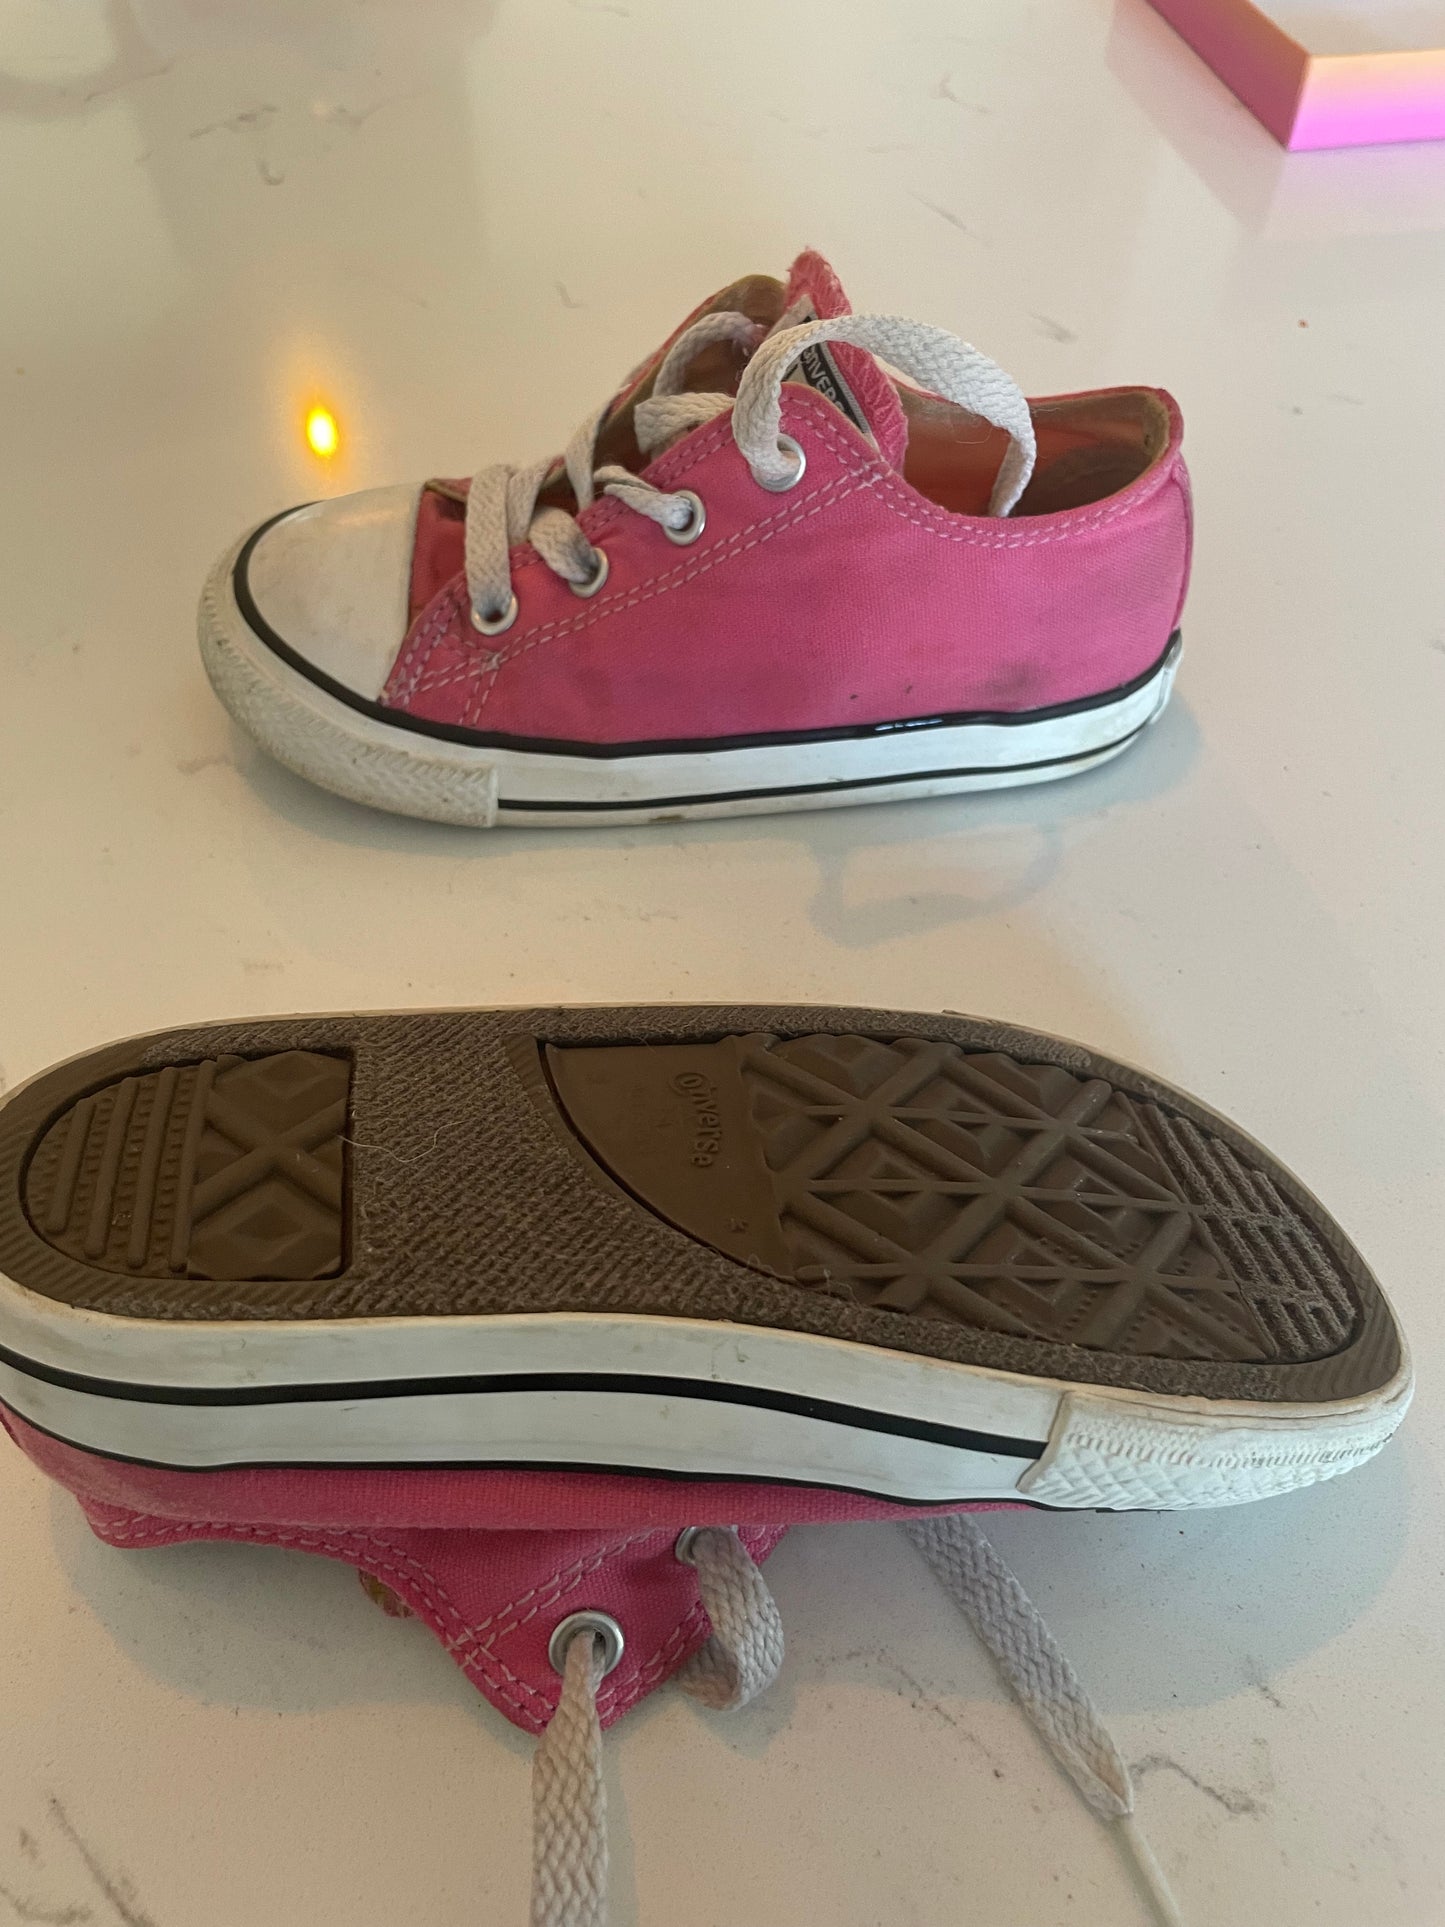 Converse - Pink - Size 9 45242